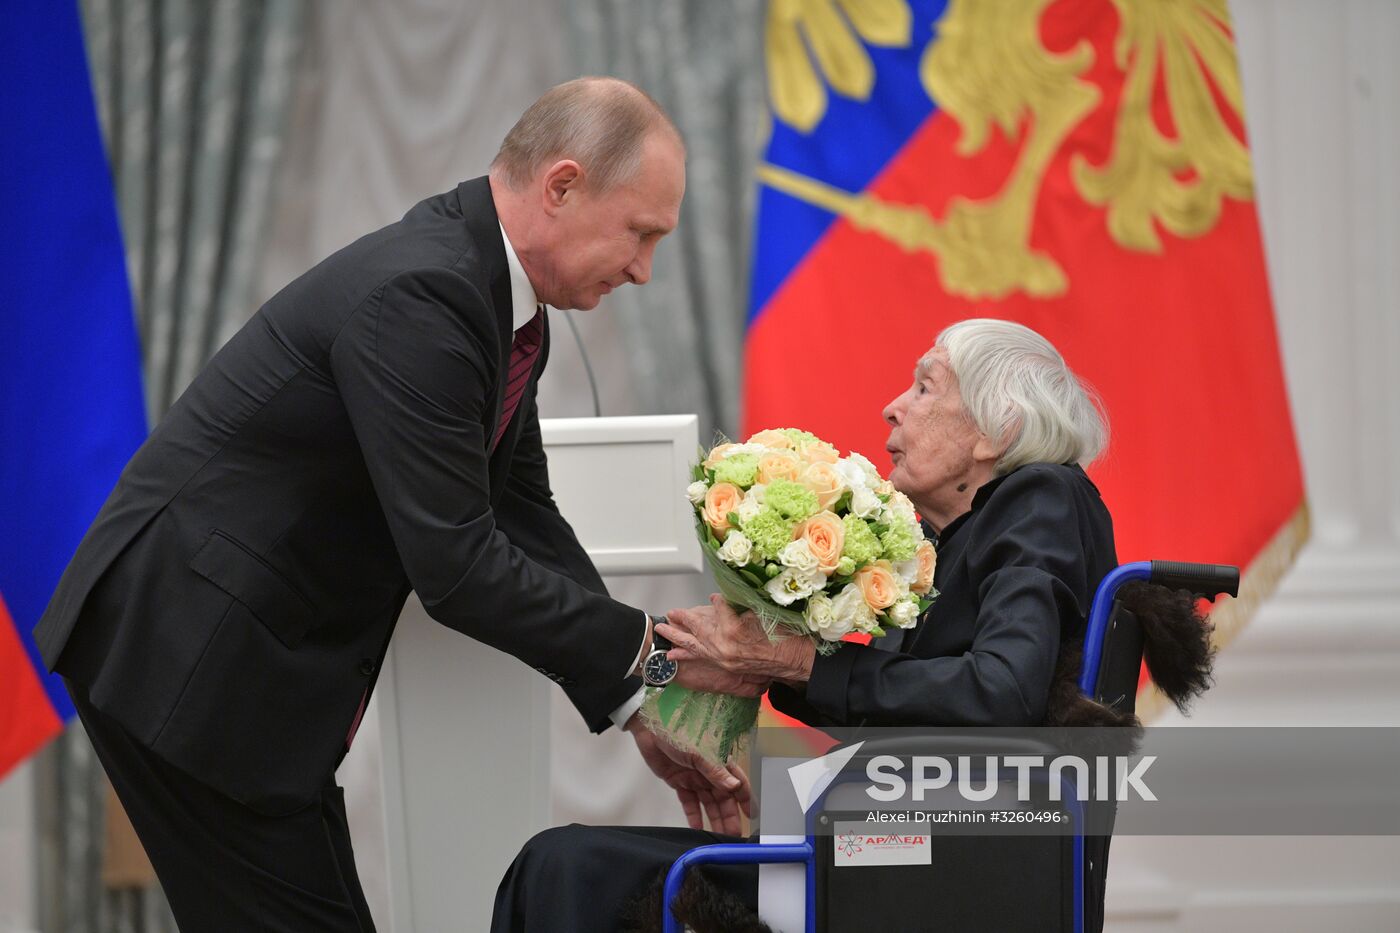 President Vladimir Putin presents human rights and charity awards